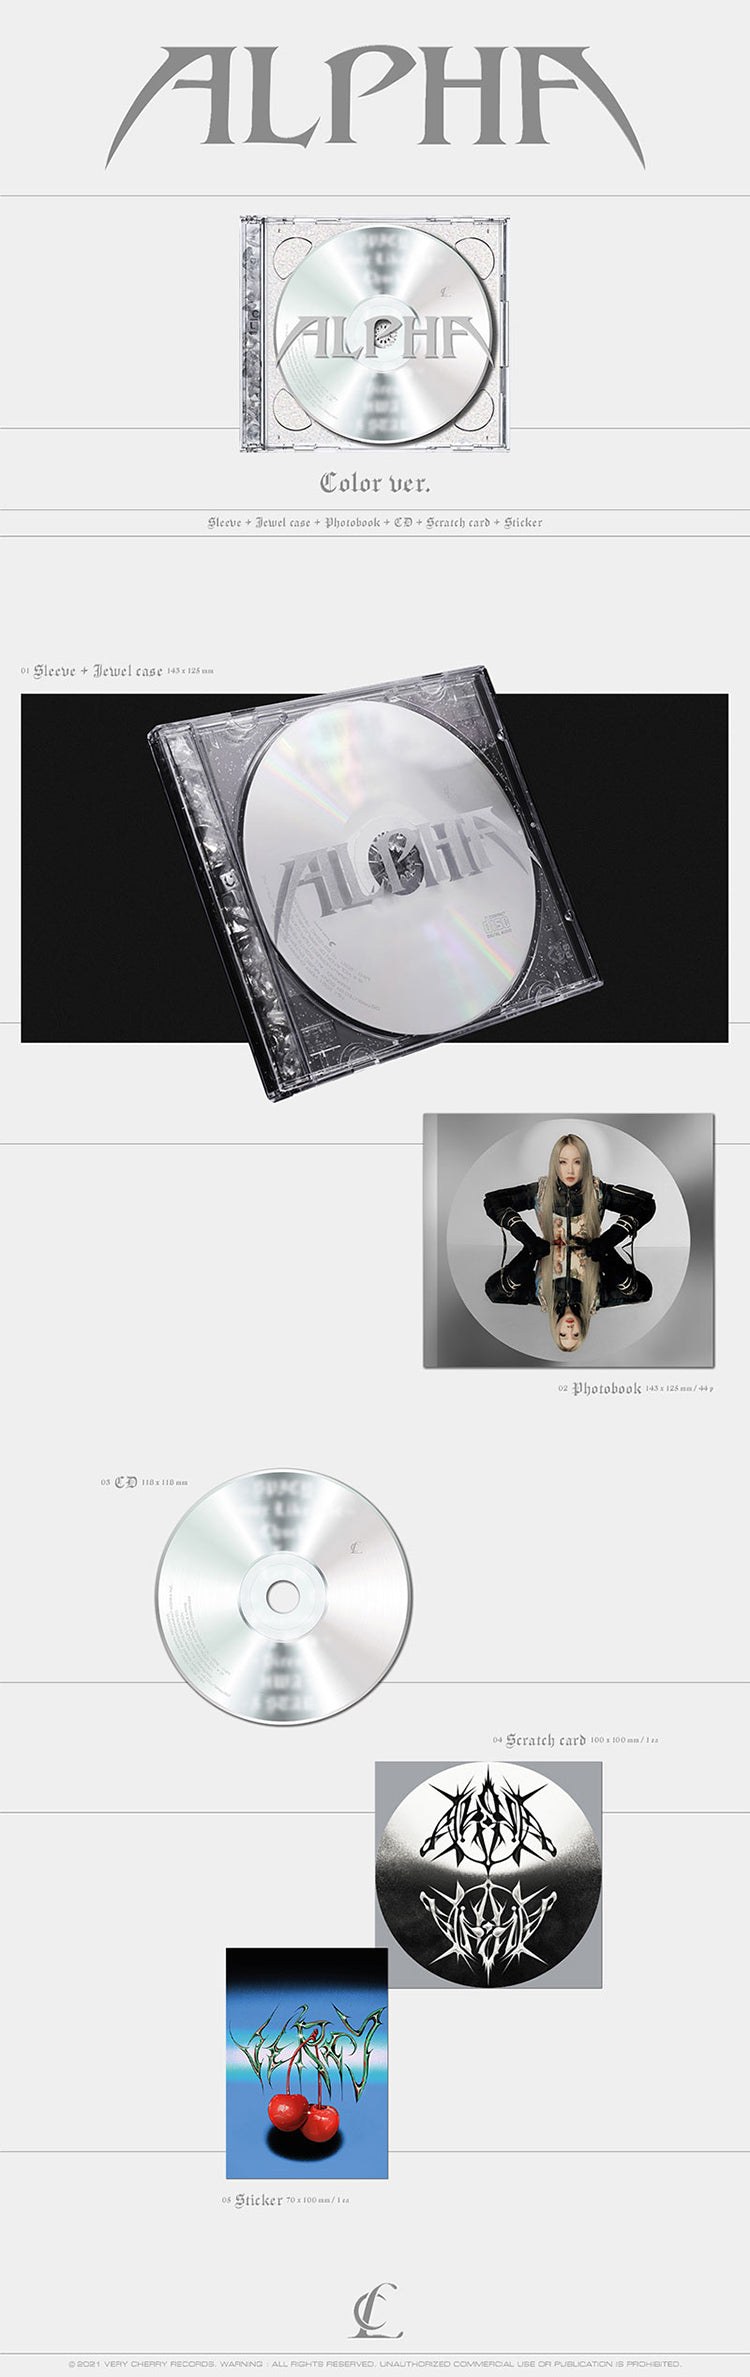 CL - Album ALPHA COLOR Ver.